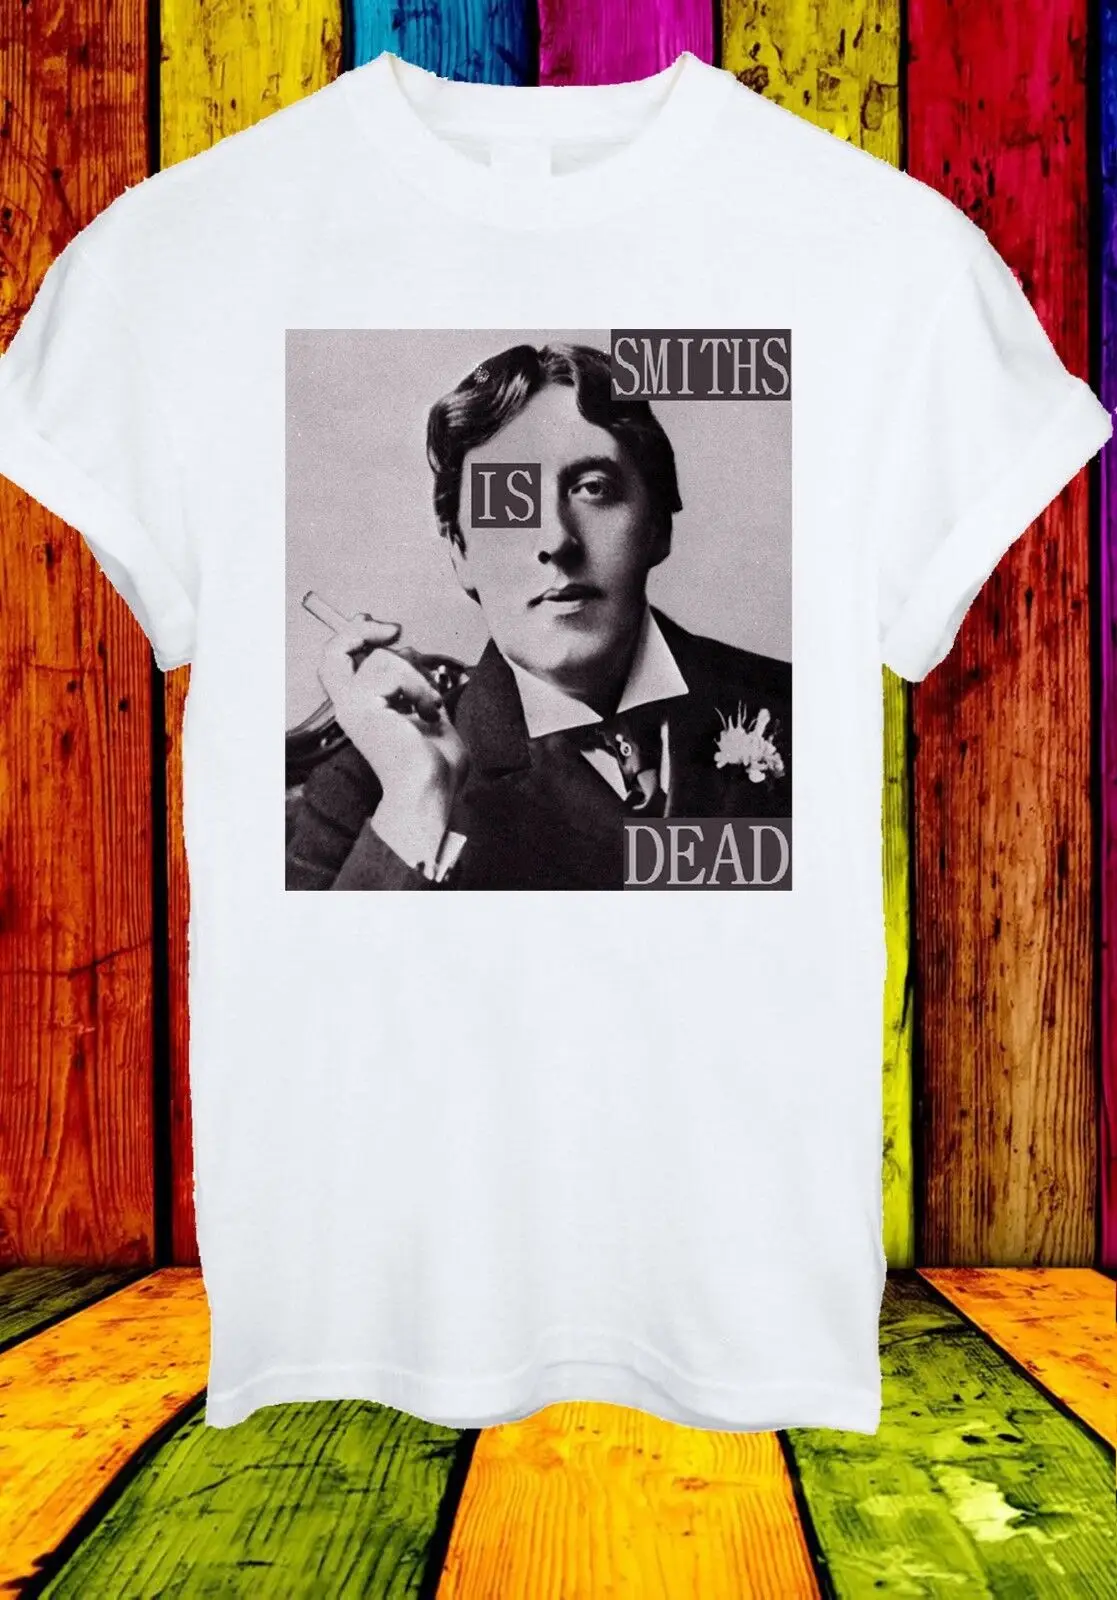 Smiths Is Dead Oscar Wilde Morrissey Мужская и женская футболка унисекс 274 Мужская и женская модная футболка унисекс бесплатная доставка